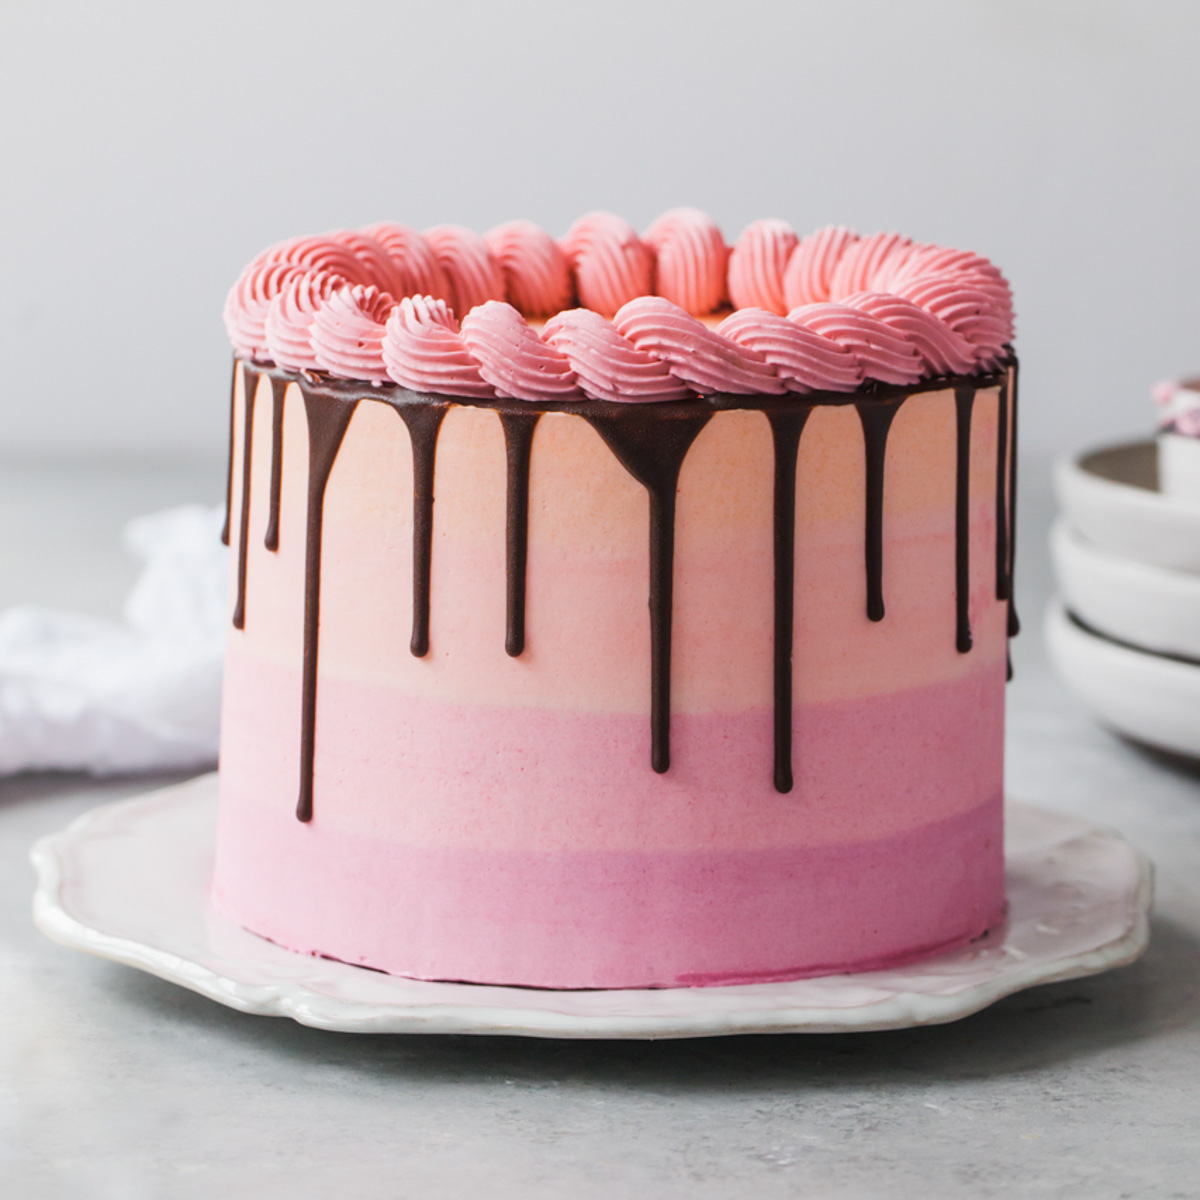 Easy Buttercream Cake Decorating Idea by Cakes StepbyStep - YouTube